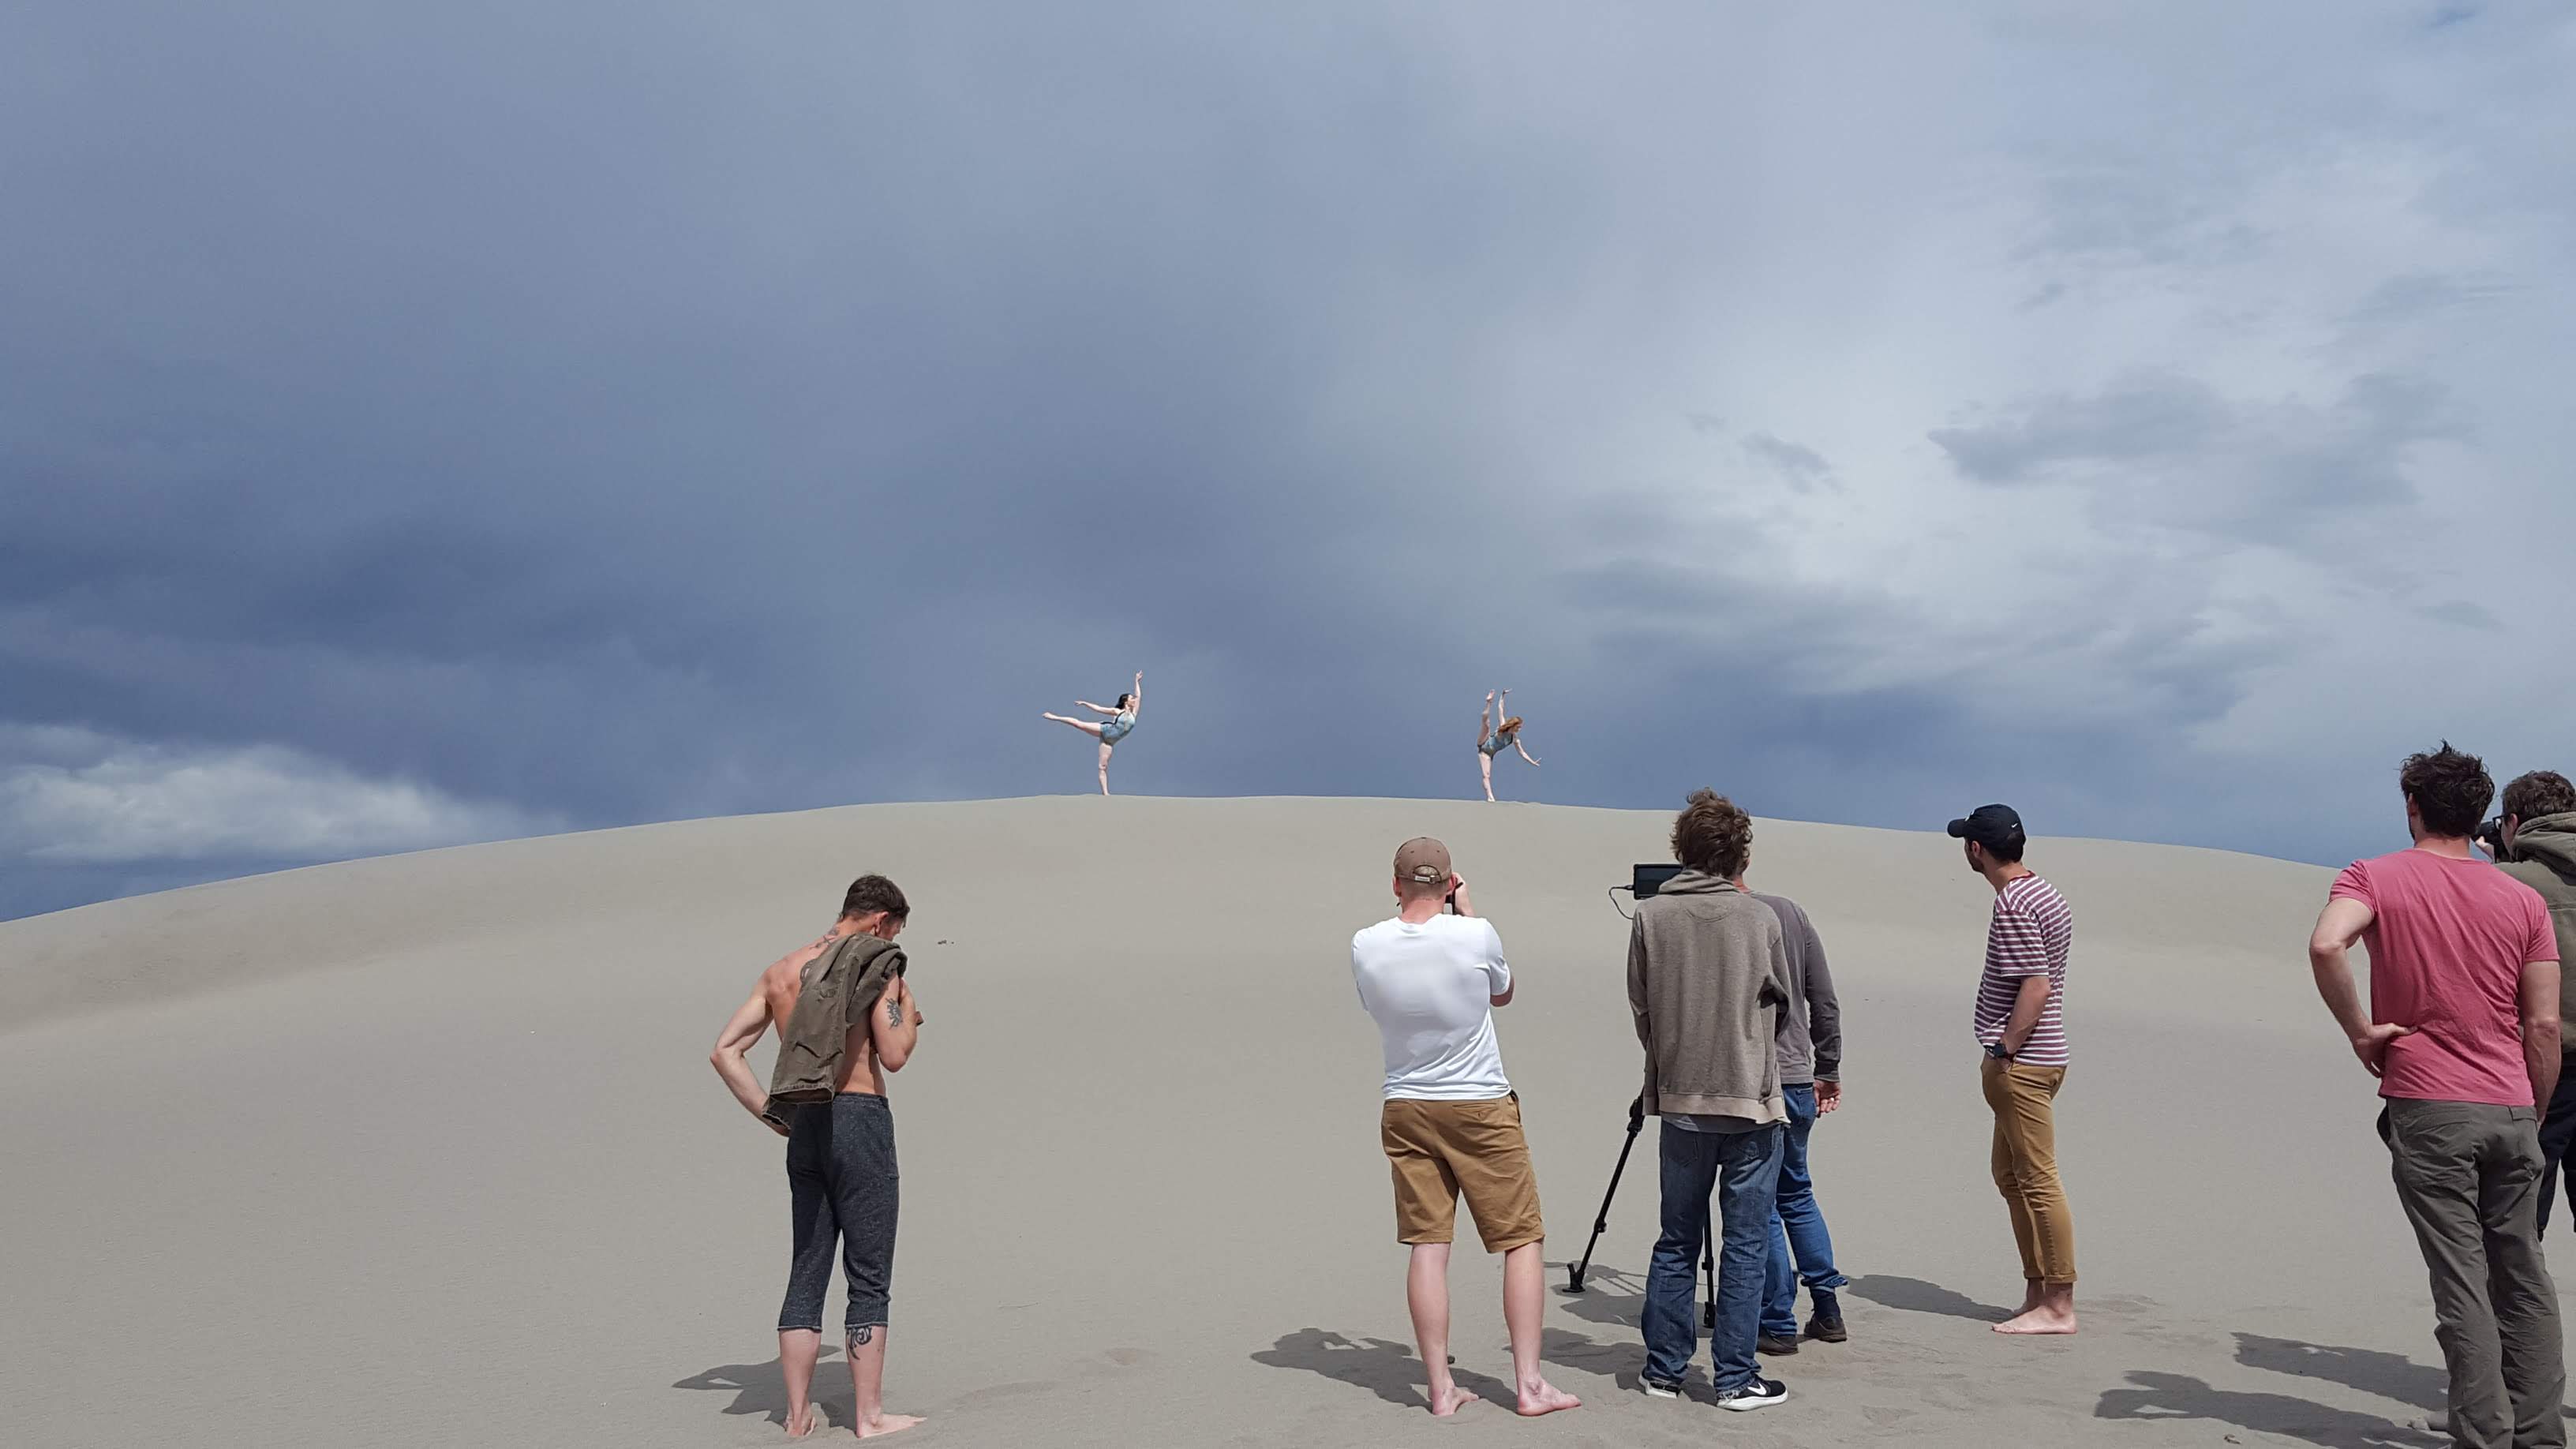 Dancers on sand dunes